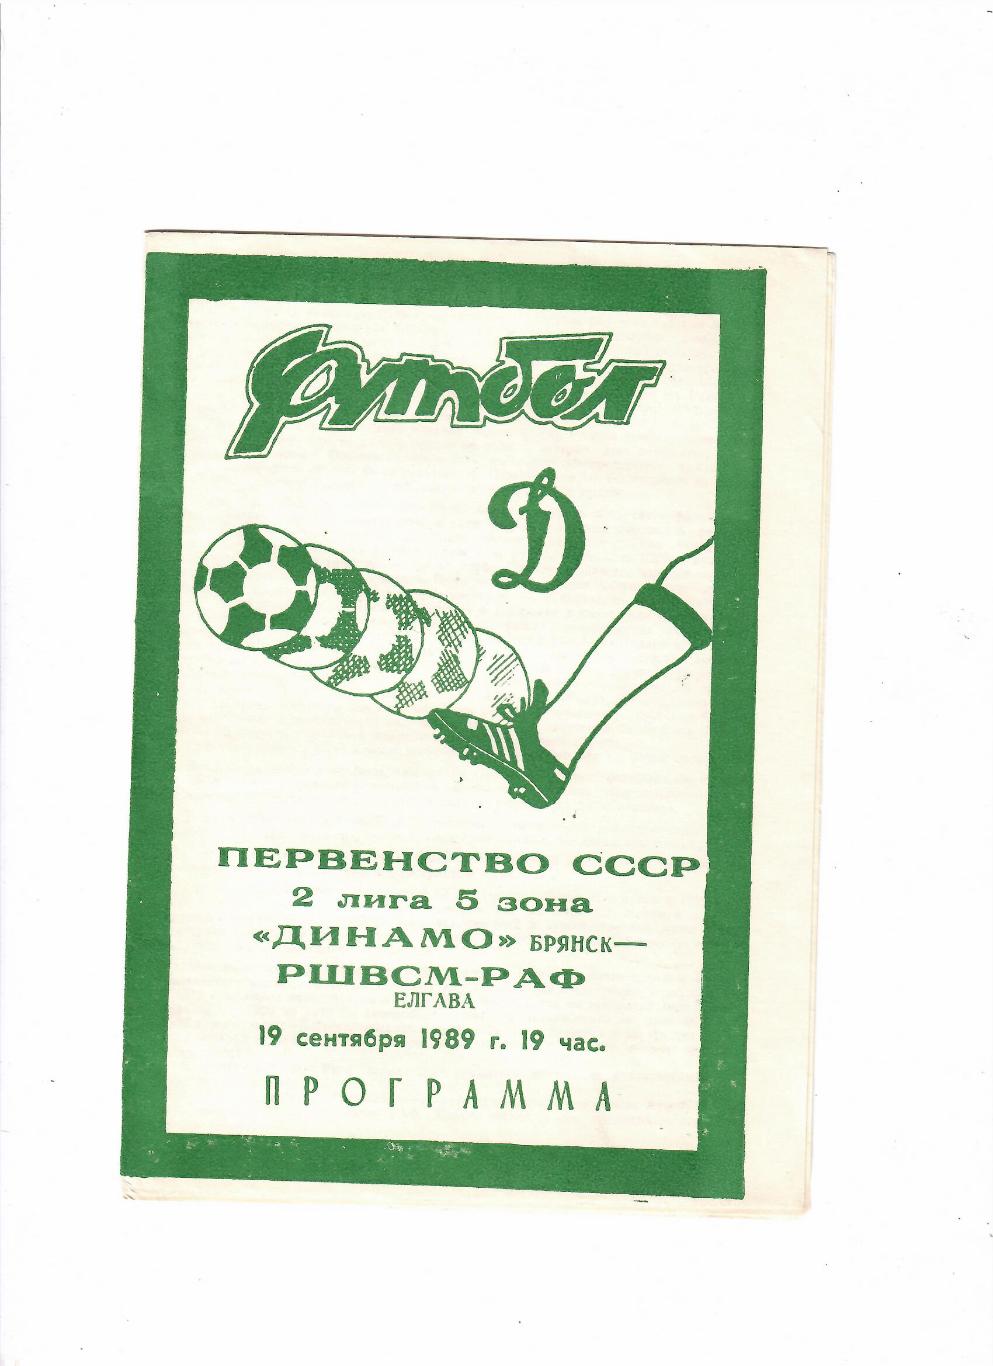 Динамо Брянск - РШВСМ-РАФ Елгава 1989